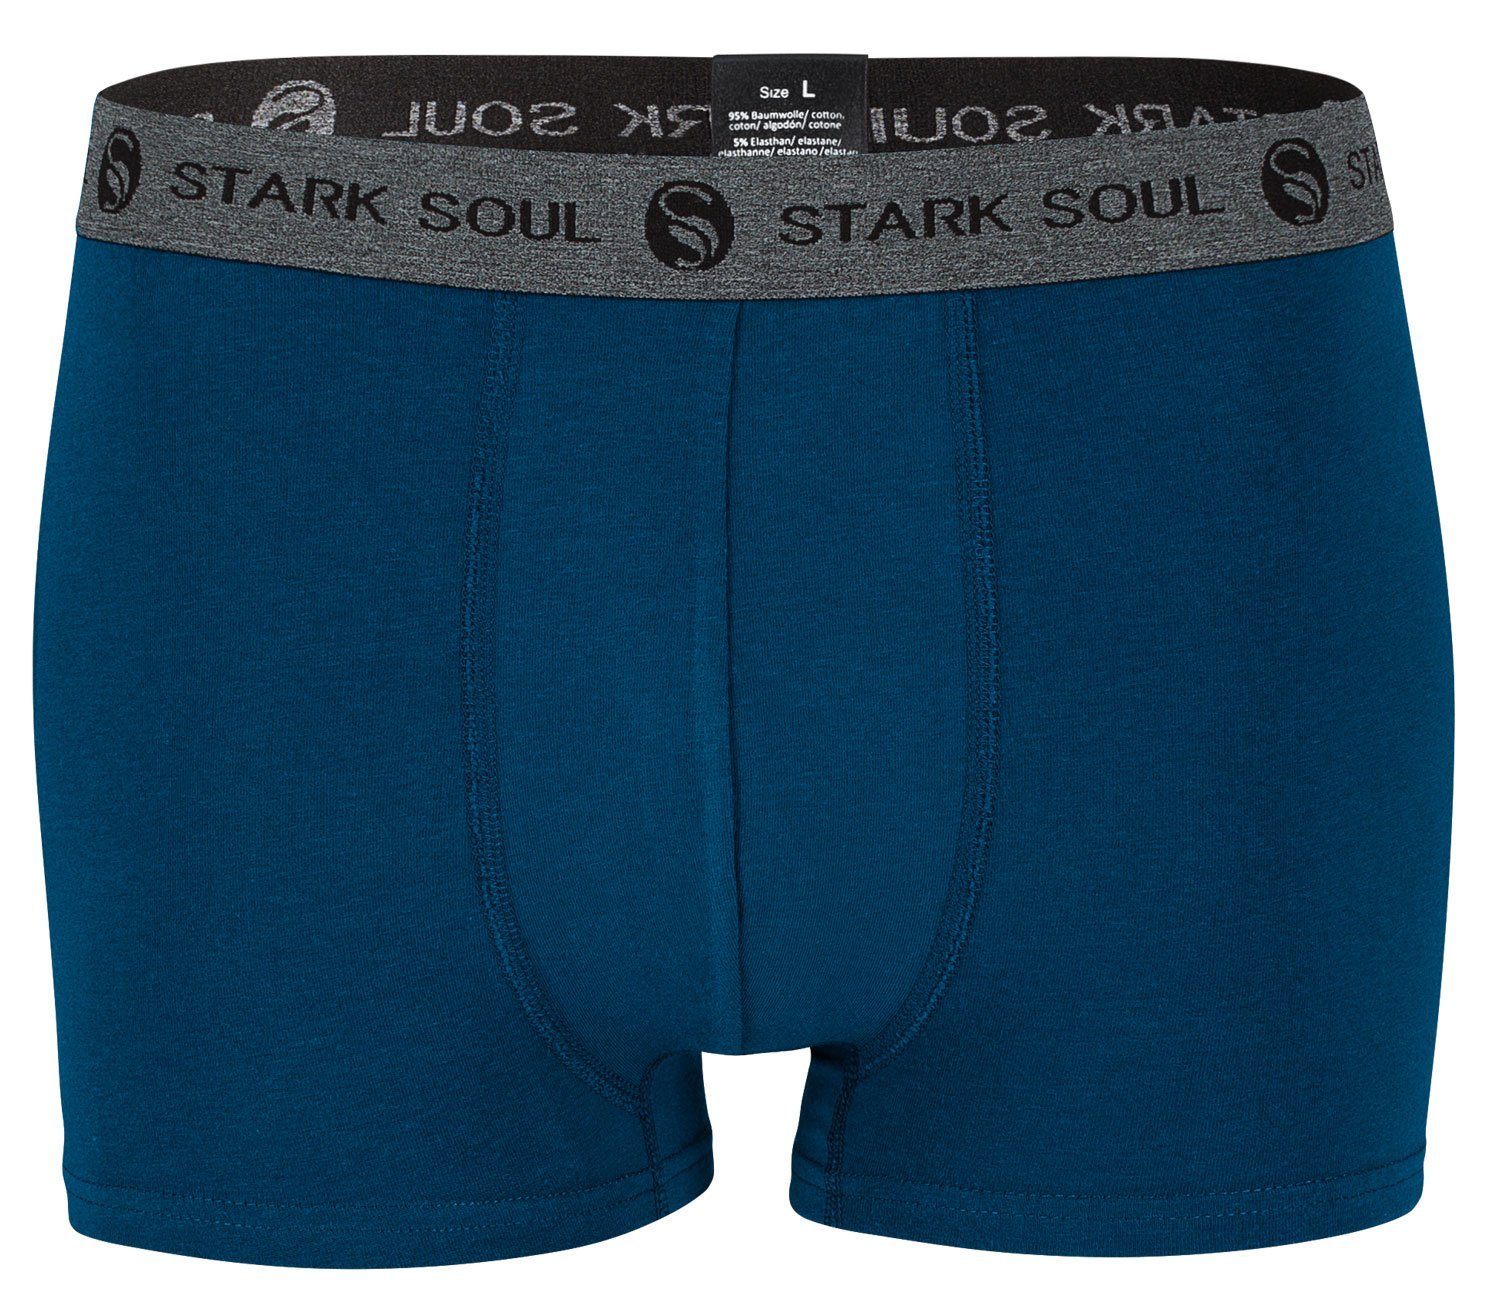 Stark Soul® Baumwoll-Unterhosen im Hipster Herren Marineblau Boxershorts Pack, 6er-Pack 6er Boxershorts